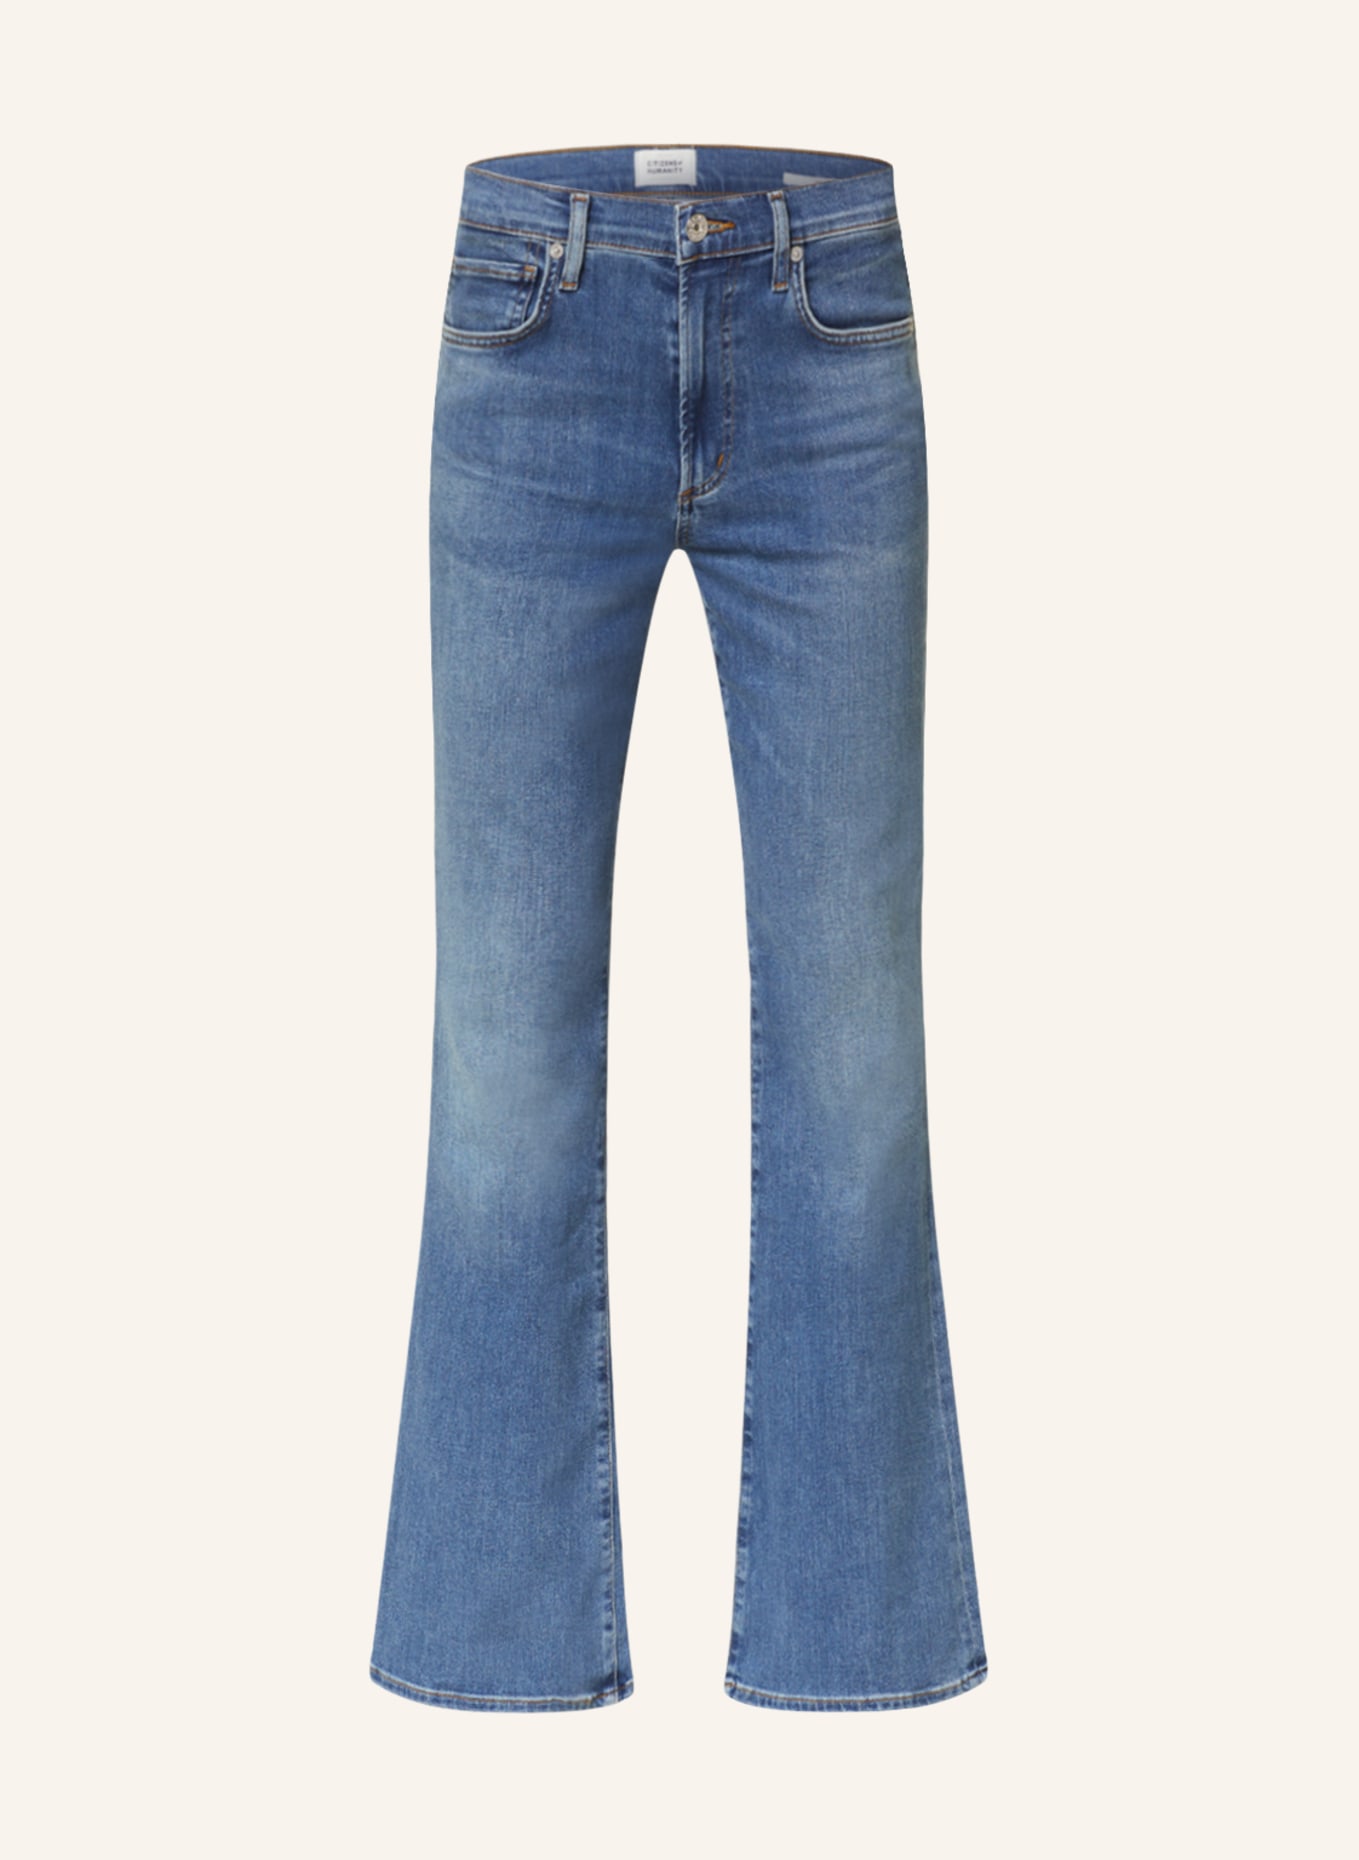 CITIZENS of HUMANITY Flared Jeans EMANNUELLE mit Shaping-Effekt, Farbe: Highball md indigo (Bild 1)